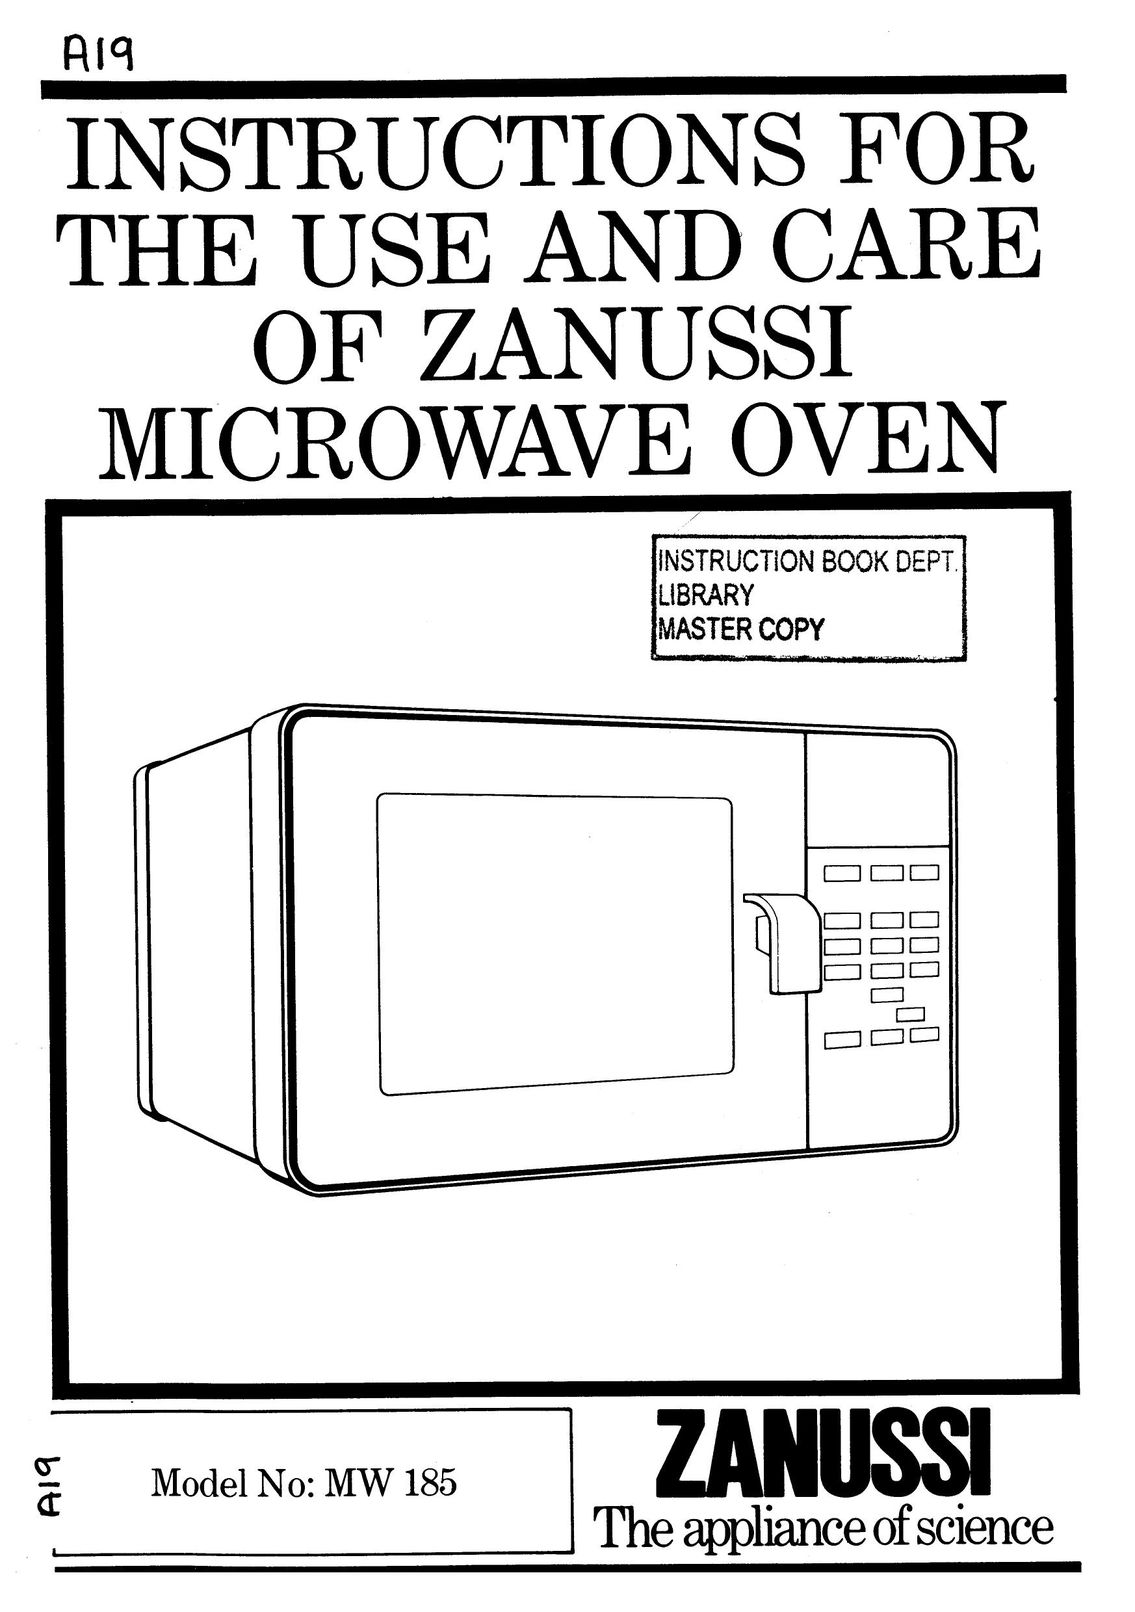 Zanussi MW 185 Microwave Oven User Manual